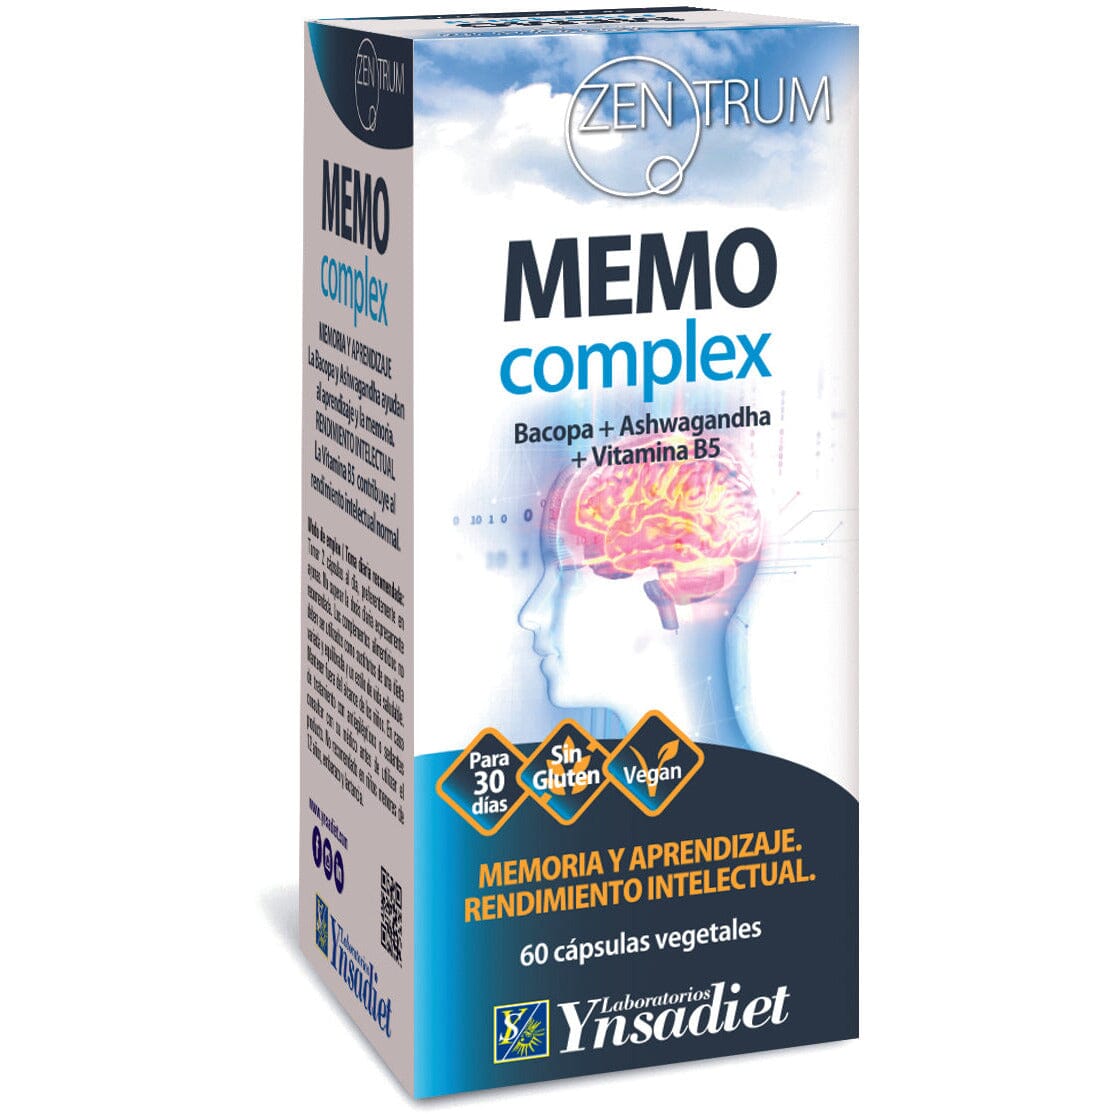 Memocomplex 60 cápsulas | Ynsadiet - Dietetica Ferrer